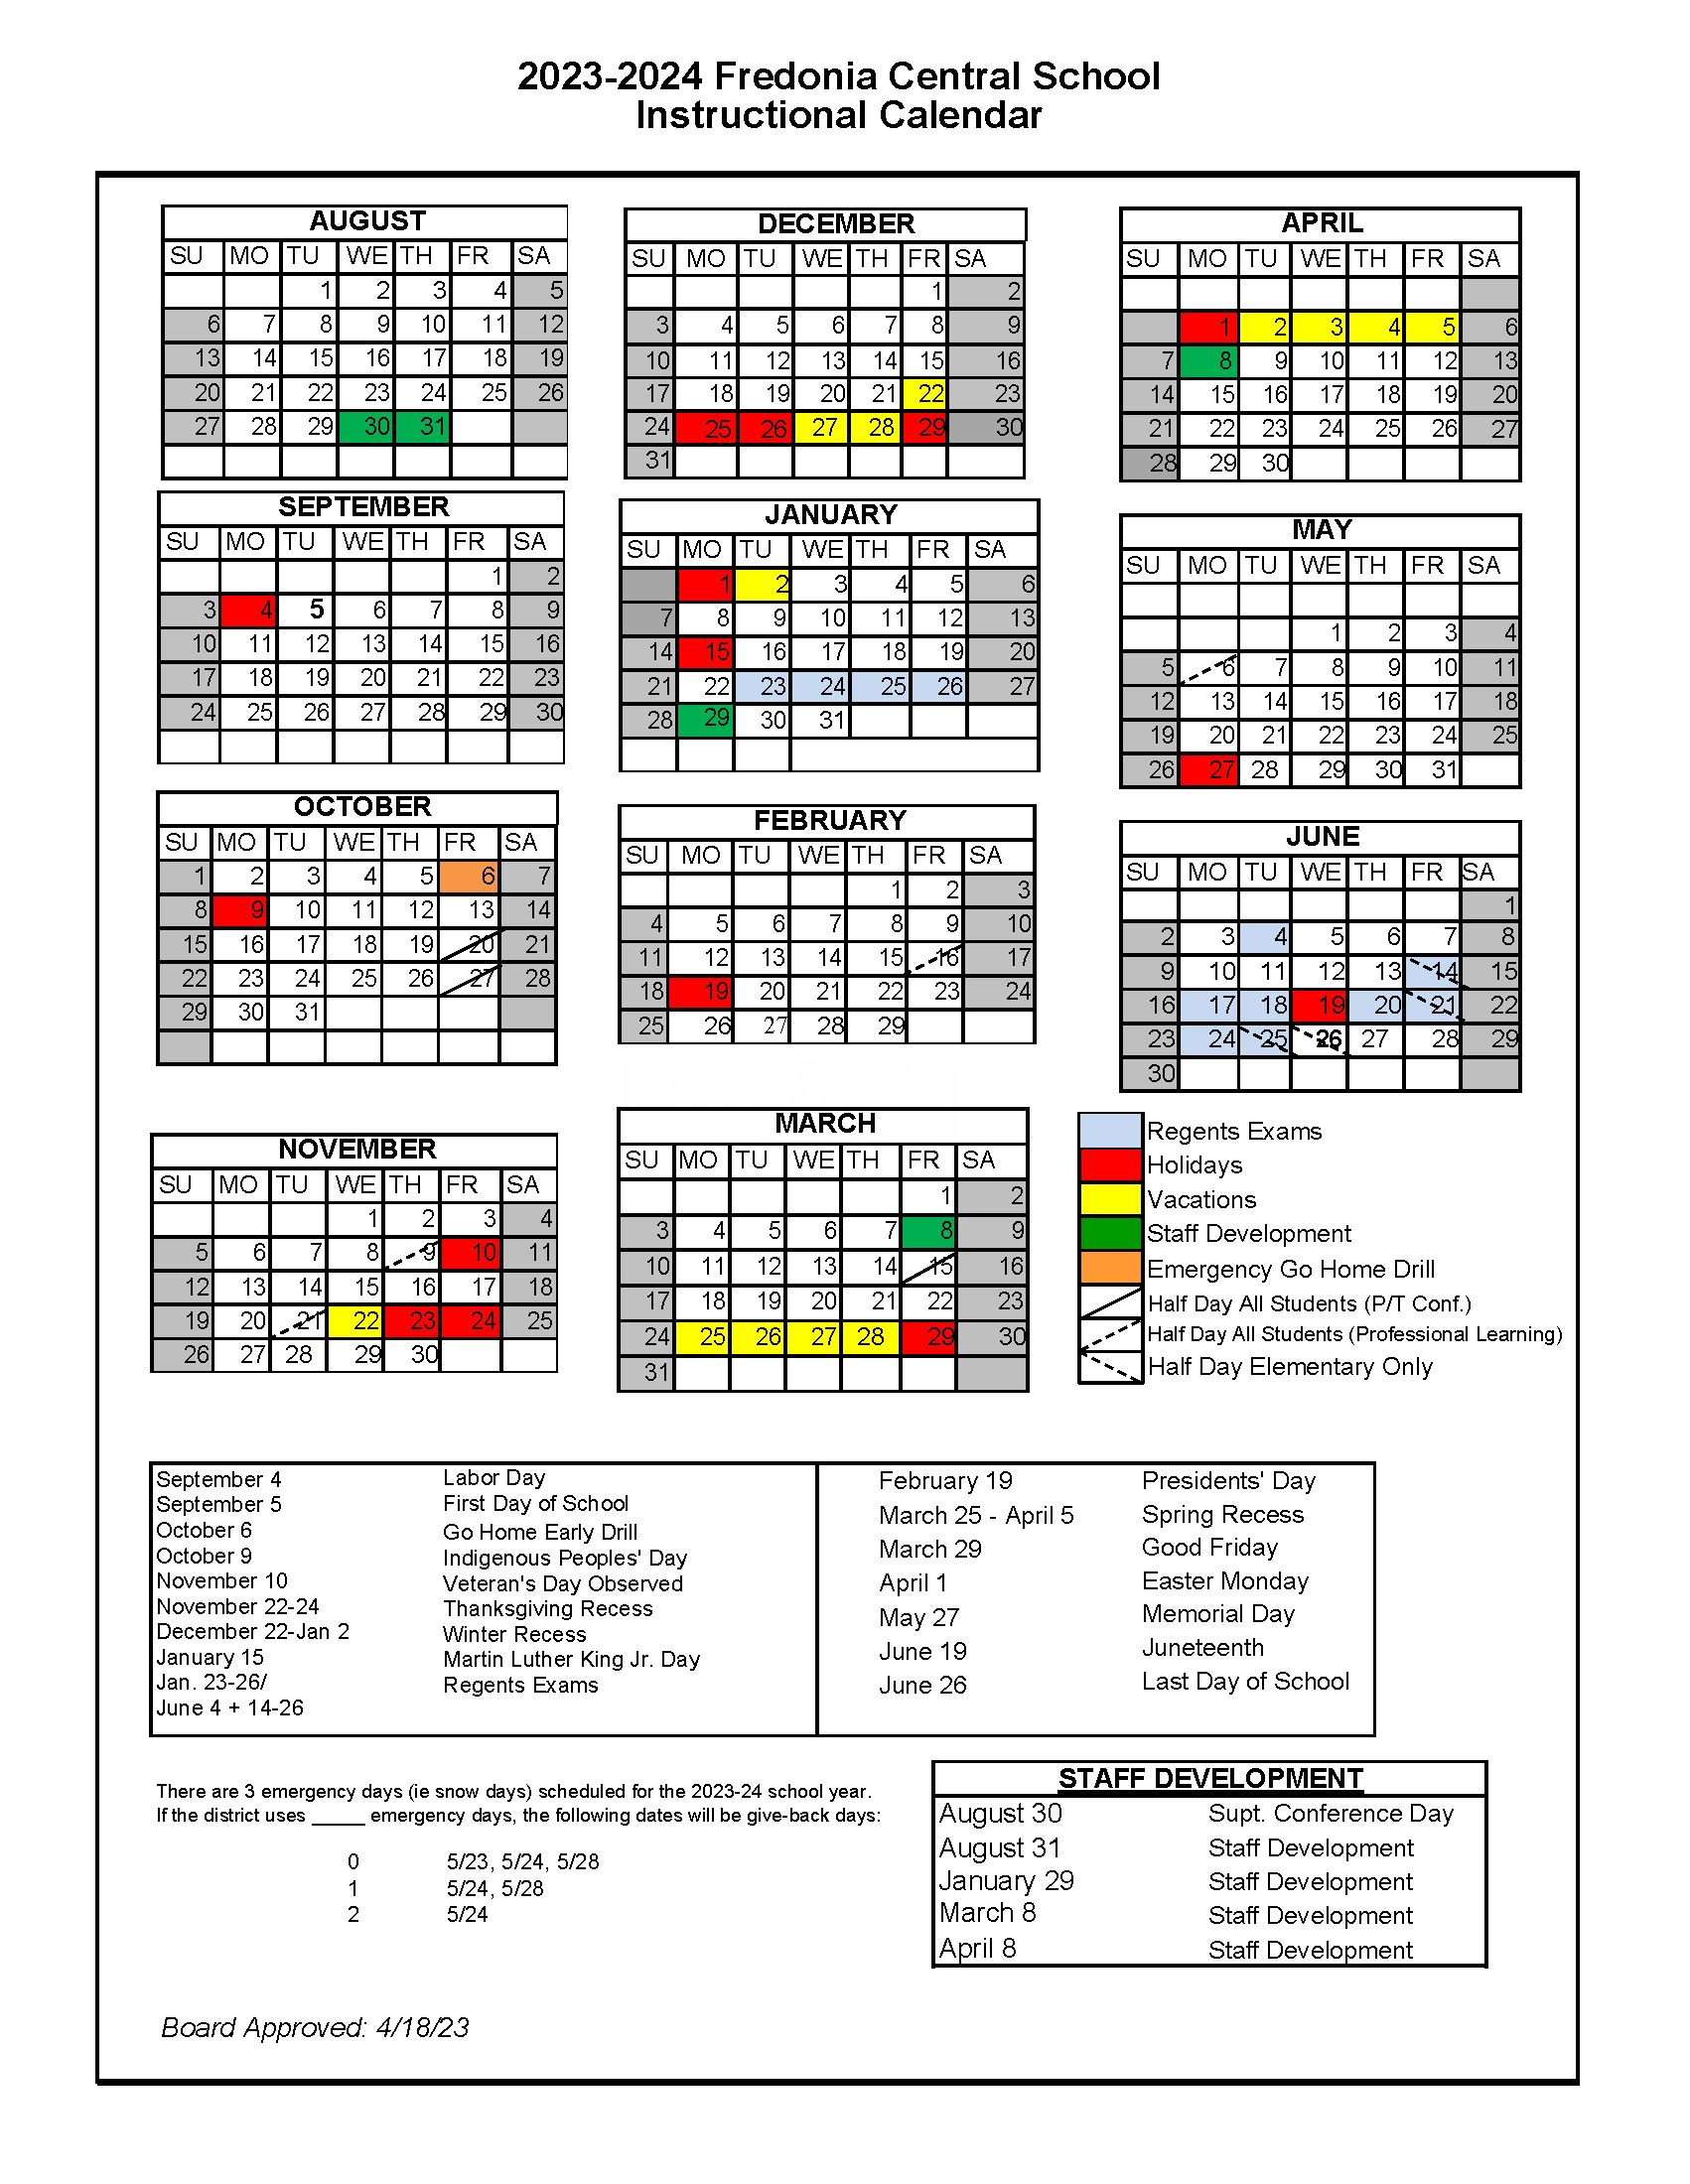 23-24 instructional calendar